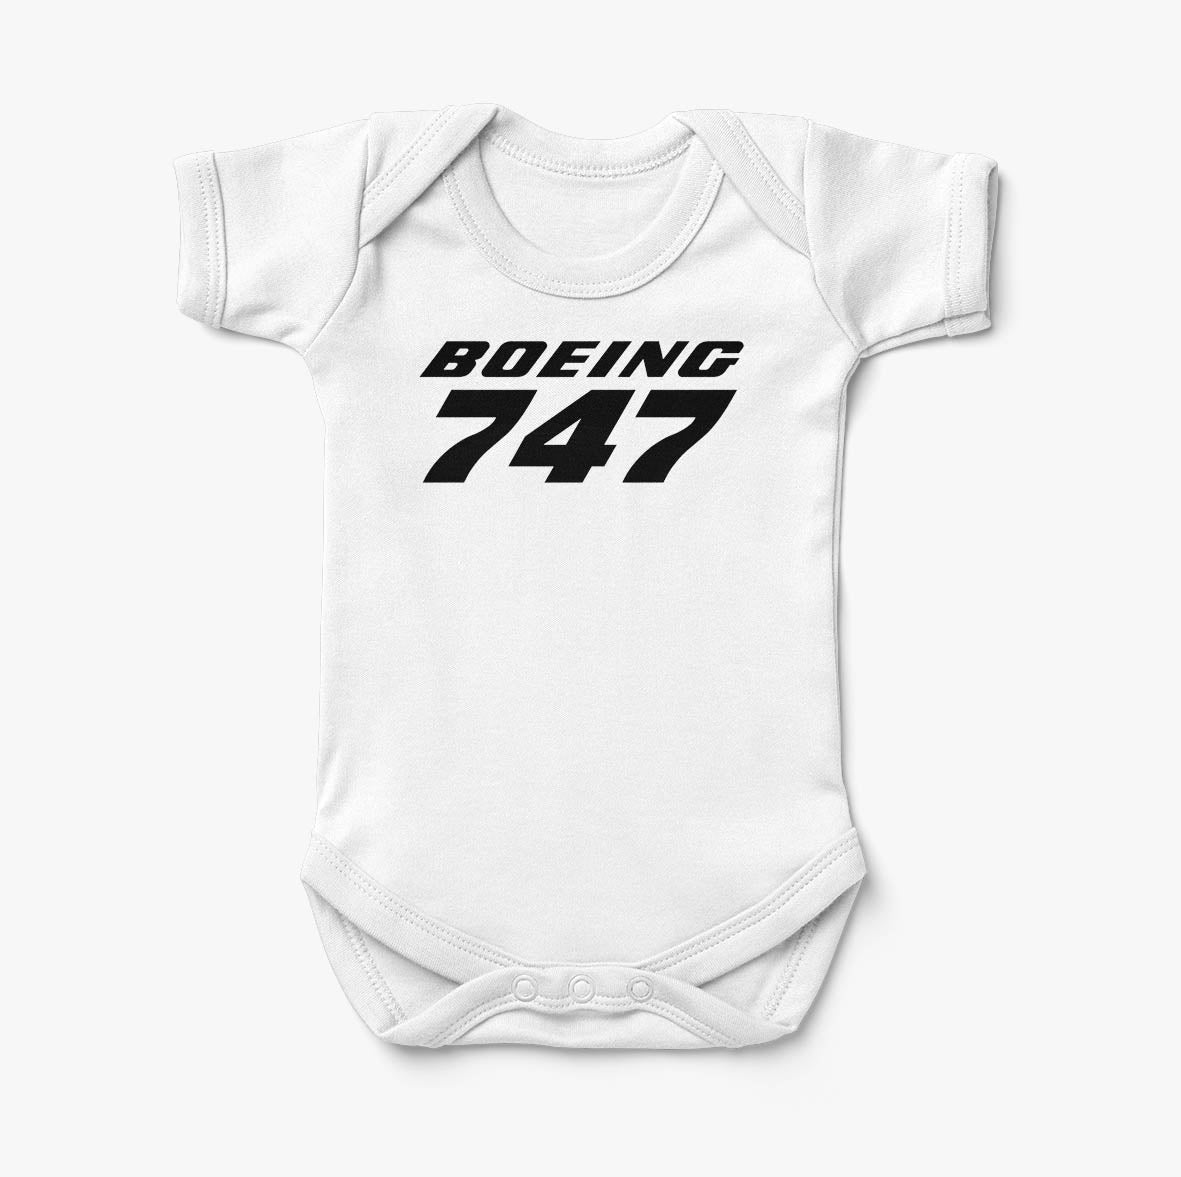 Boeing 747 & Text Designed Baby Bodysuits